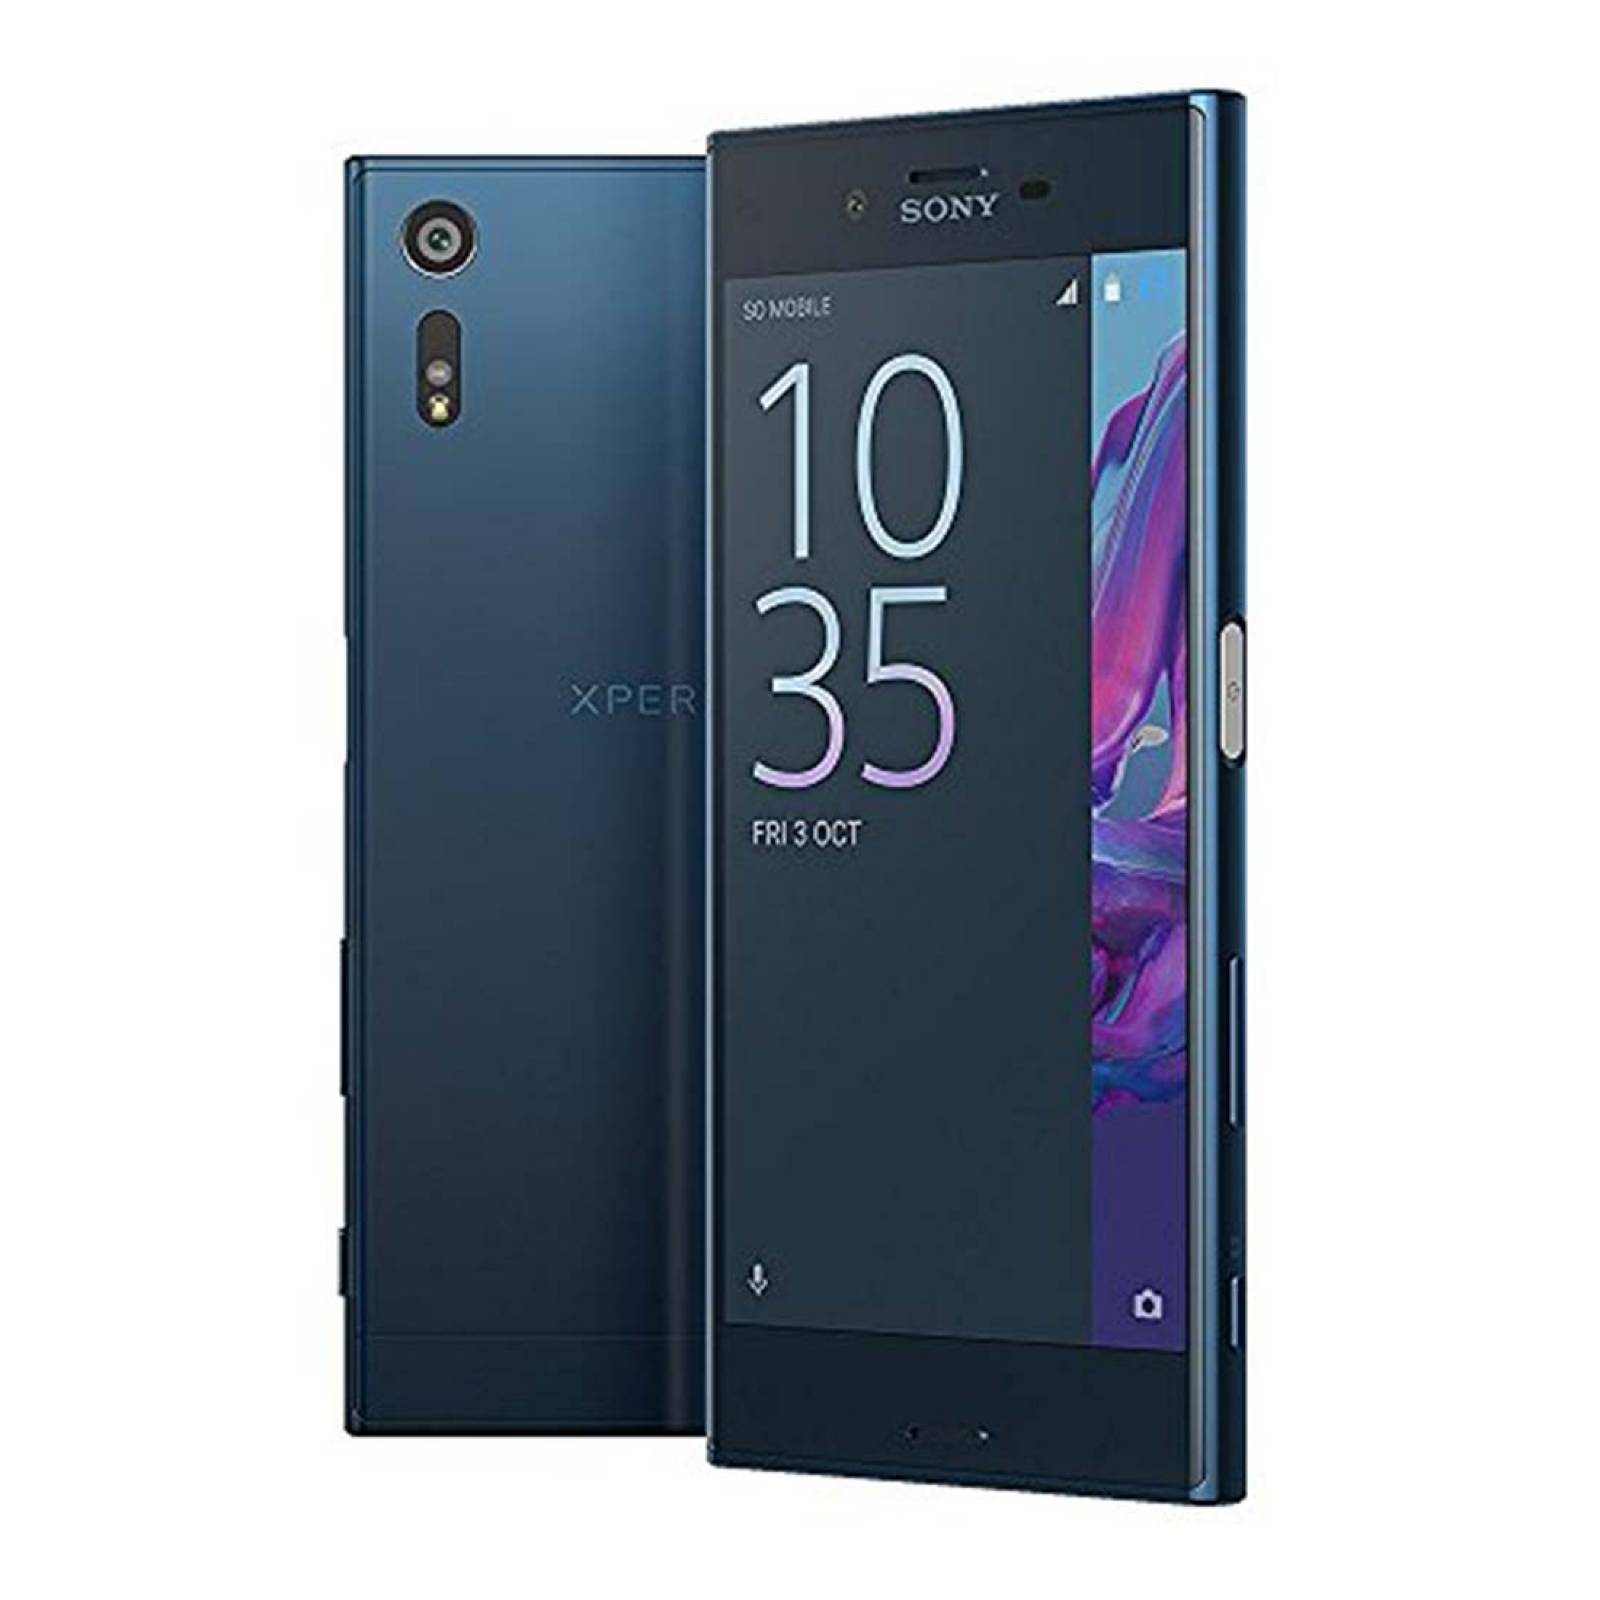 Sony Xperia XZ PSA 5.2 Full HD RAM 3GB Android 7.0 F8331